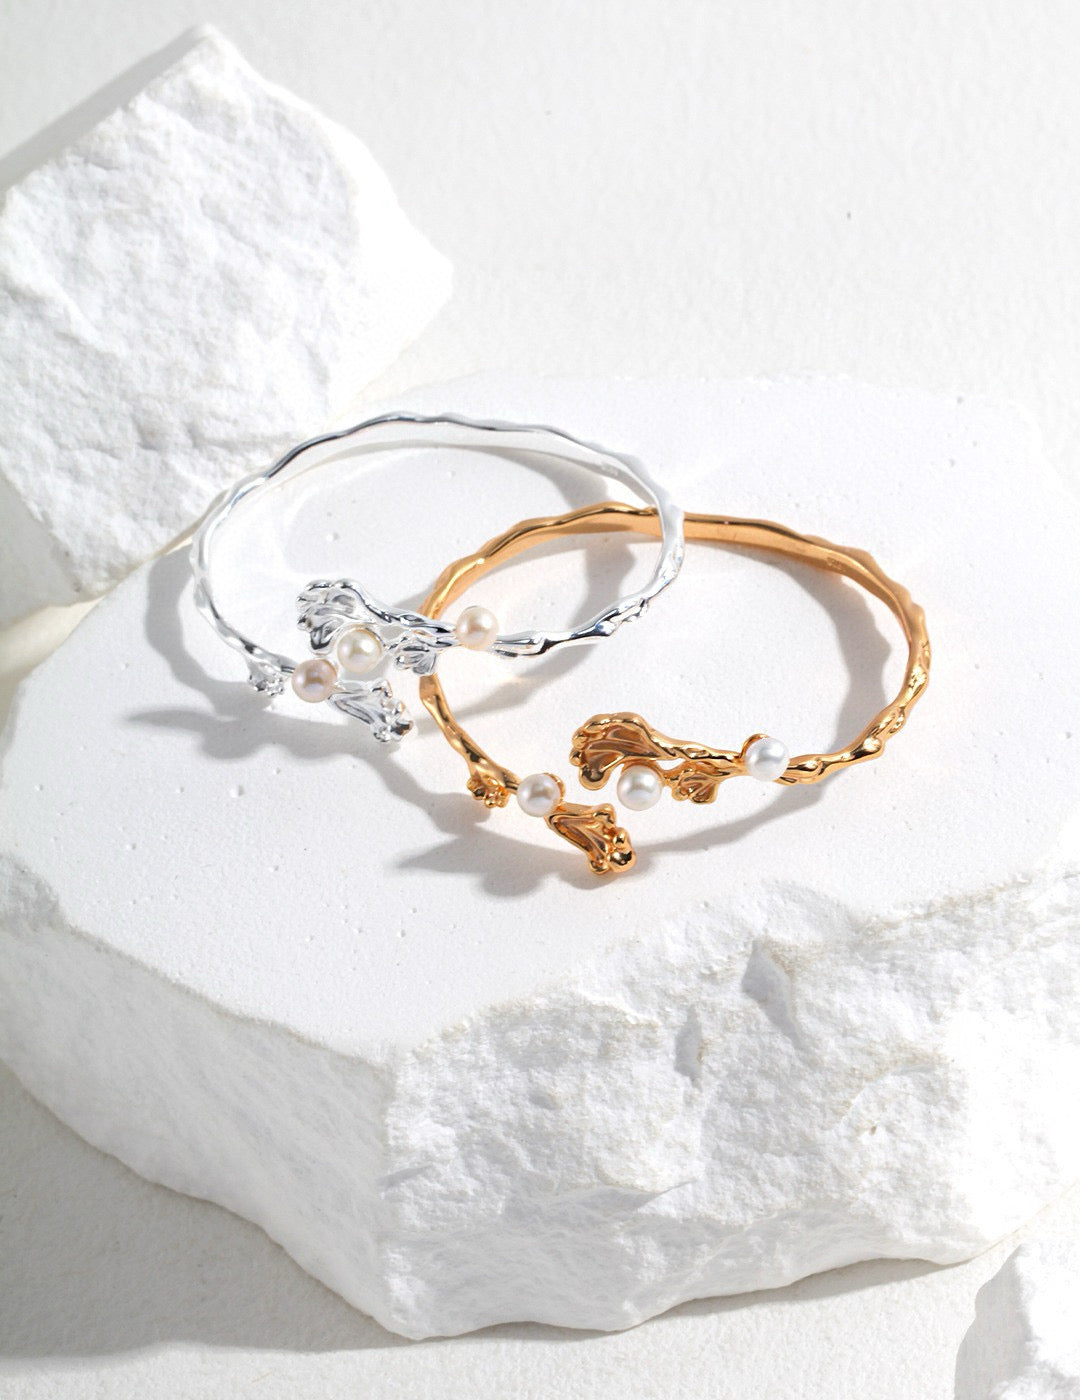 Elevate Your Style: Dovis Jewelry Has Beautiful Designer Bracelets for Women